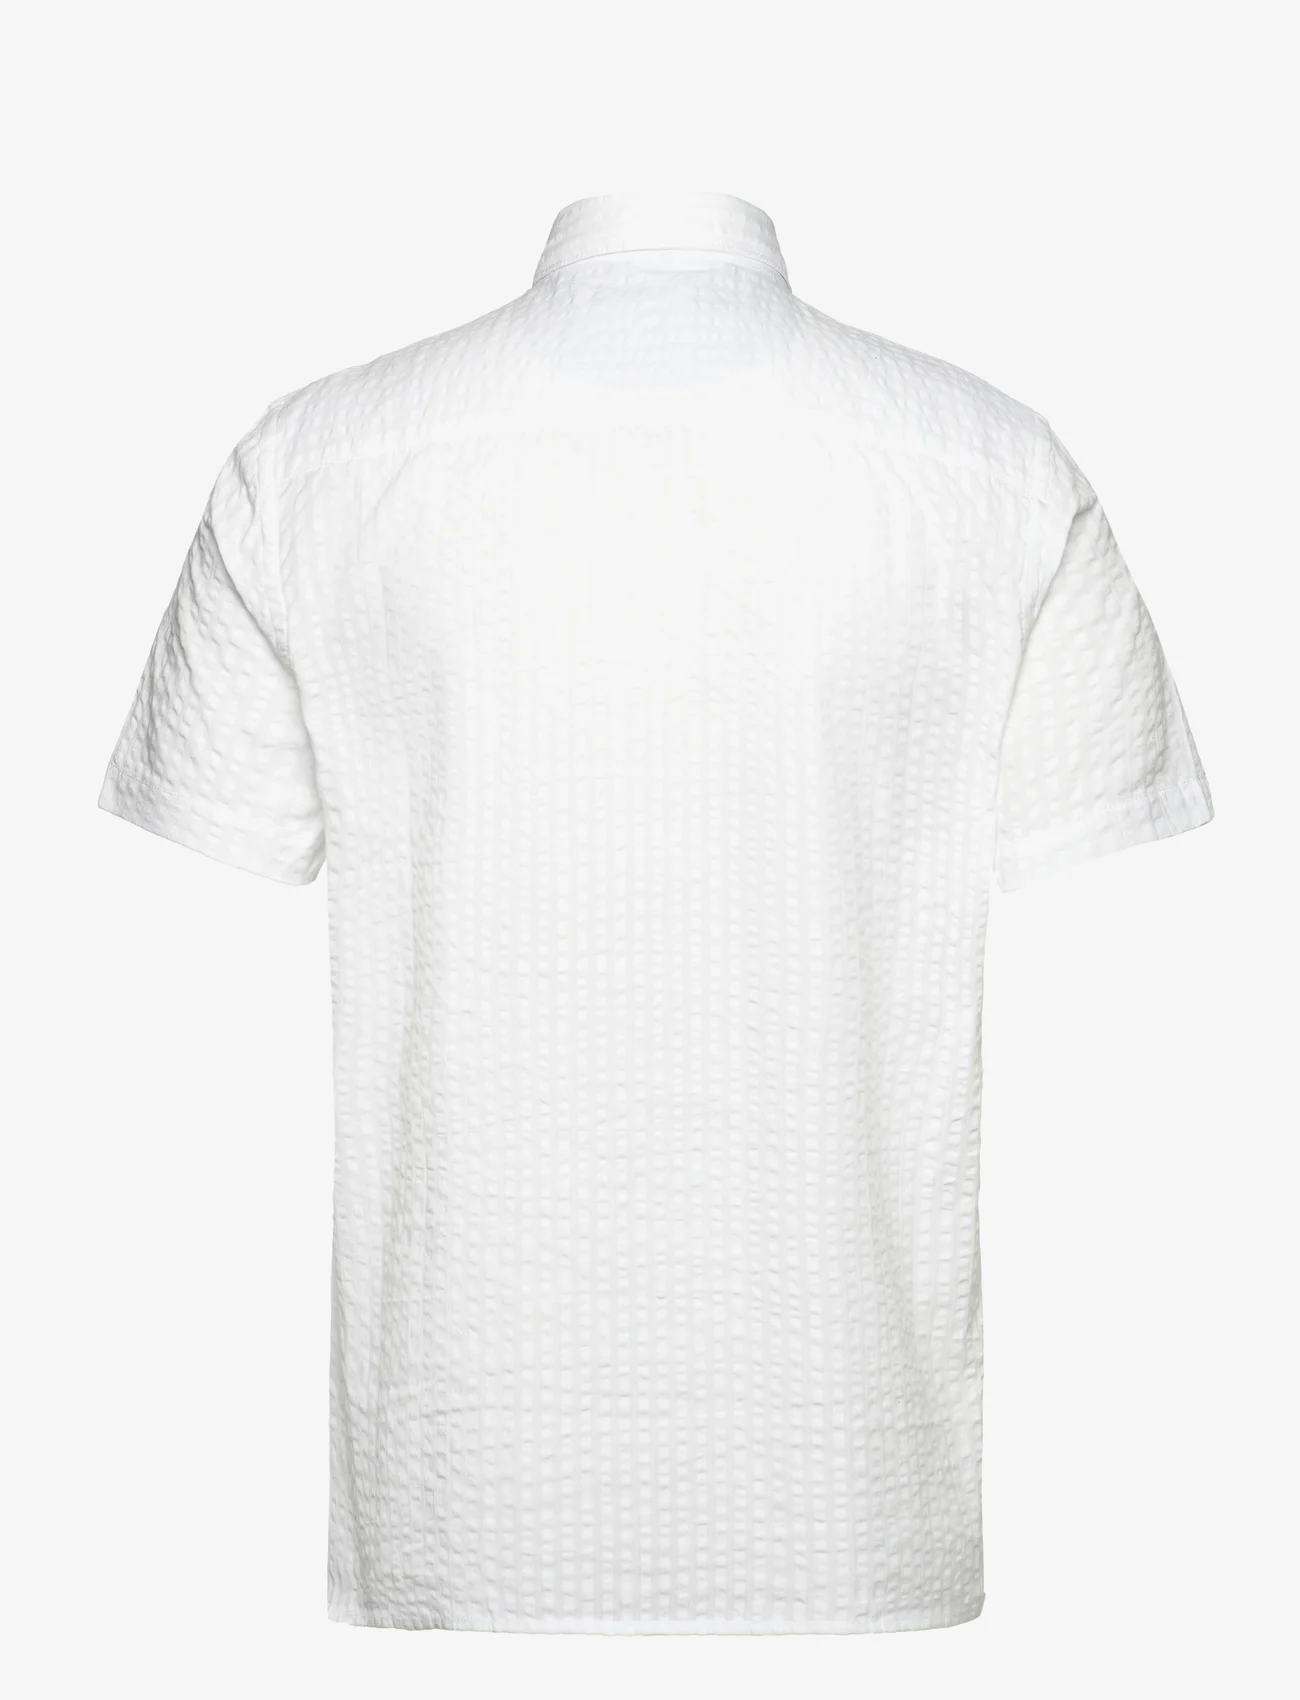 French Connection - SS SEERSUCKER CHECK SHIRT - marškiniai trumpomis rankovėmis - white - 1